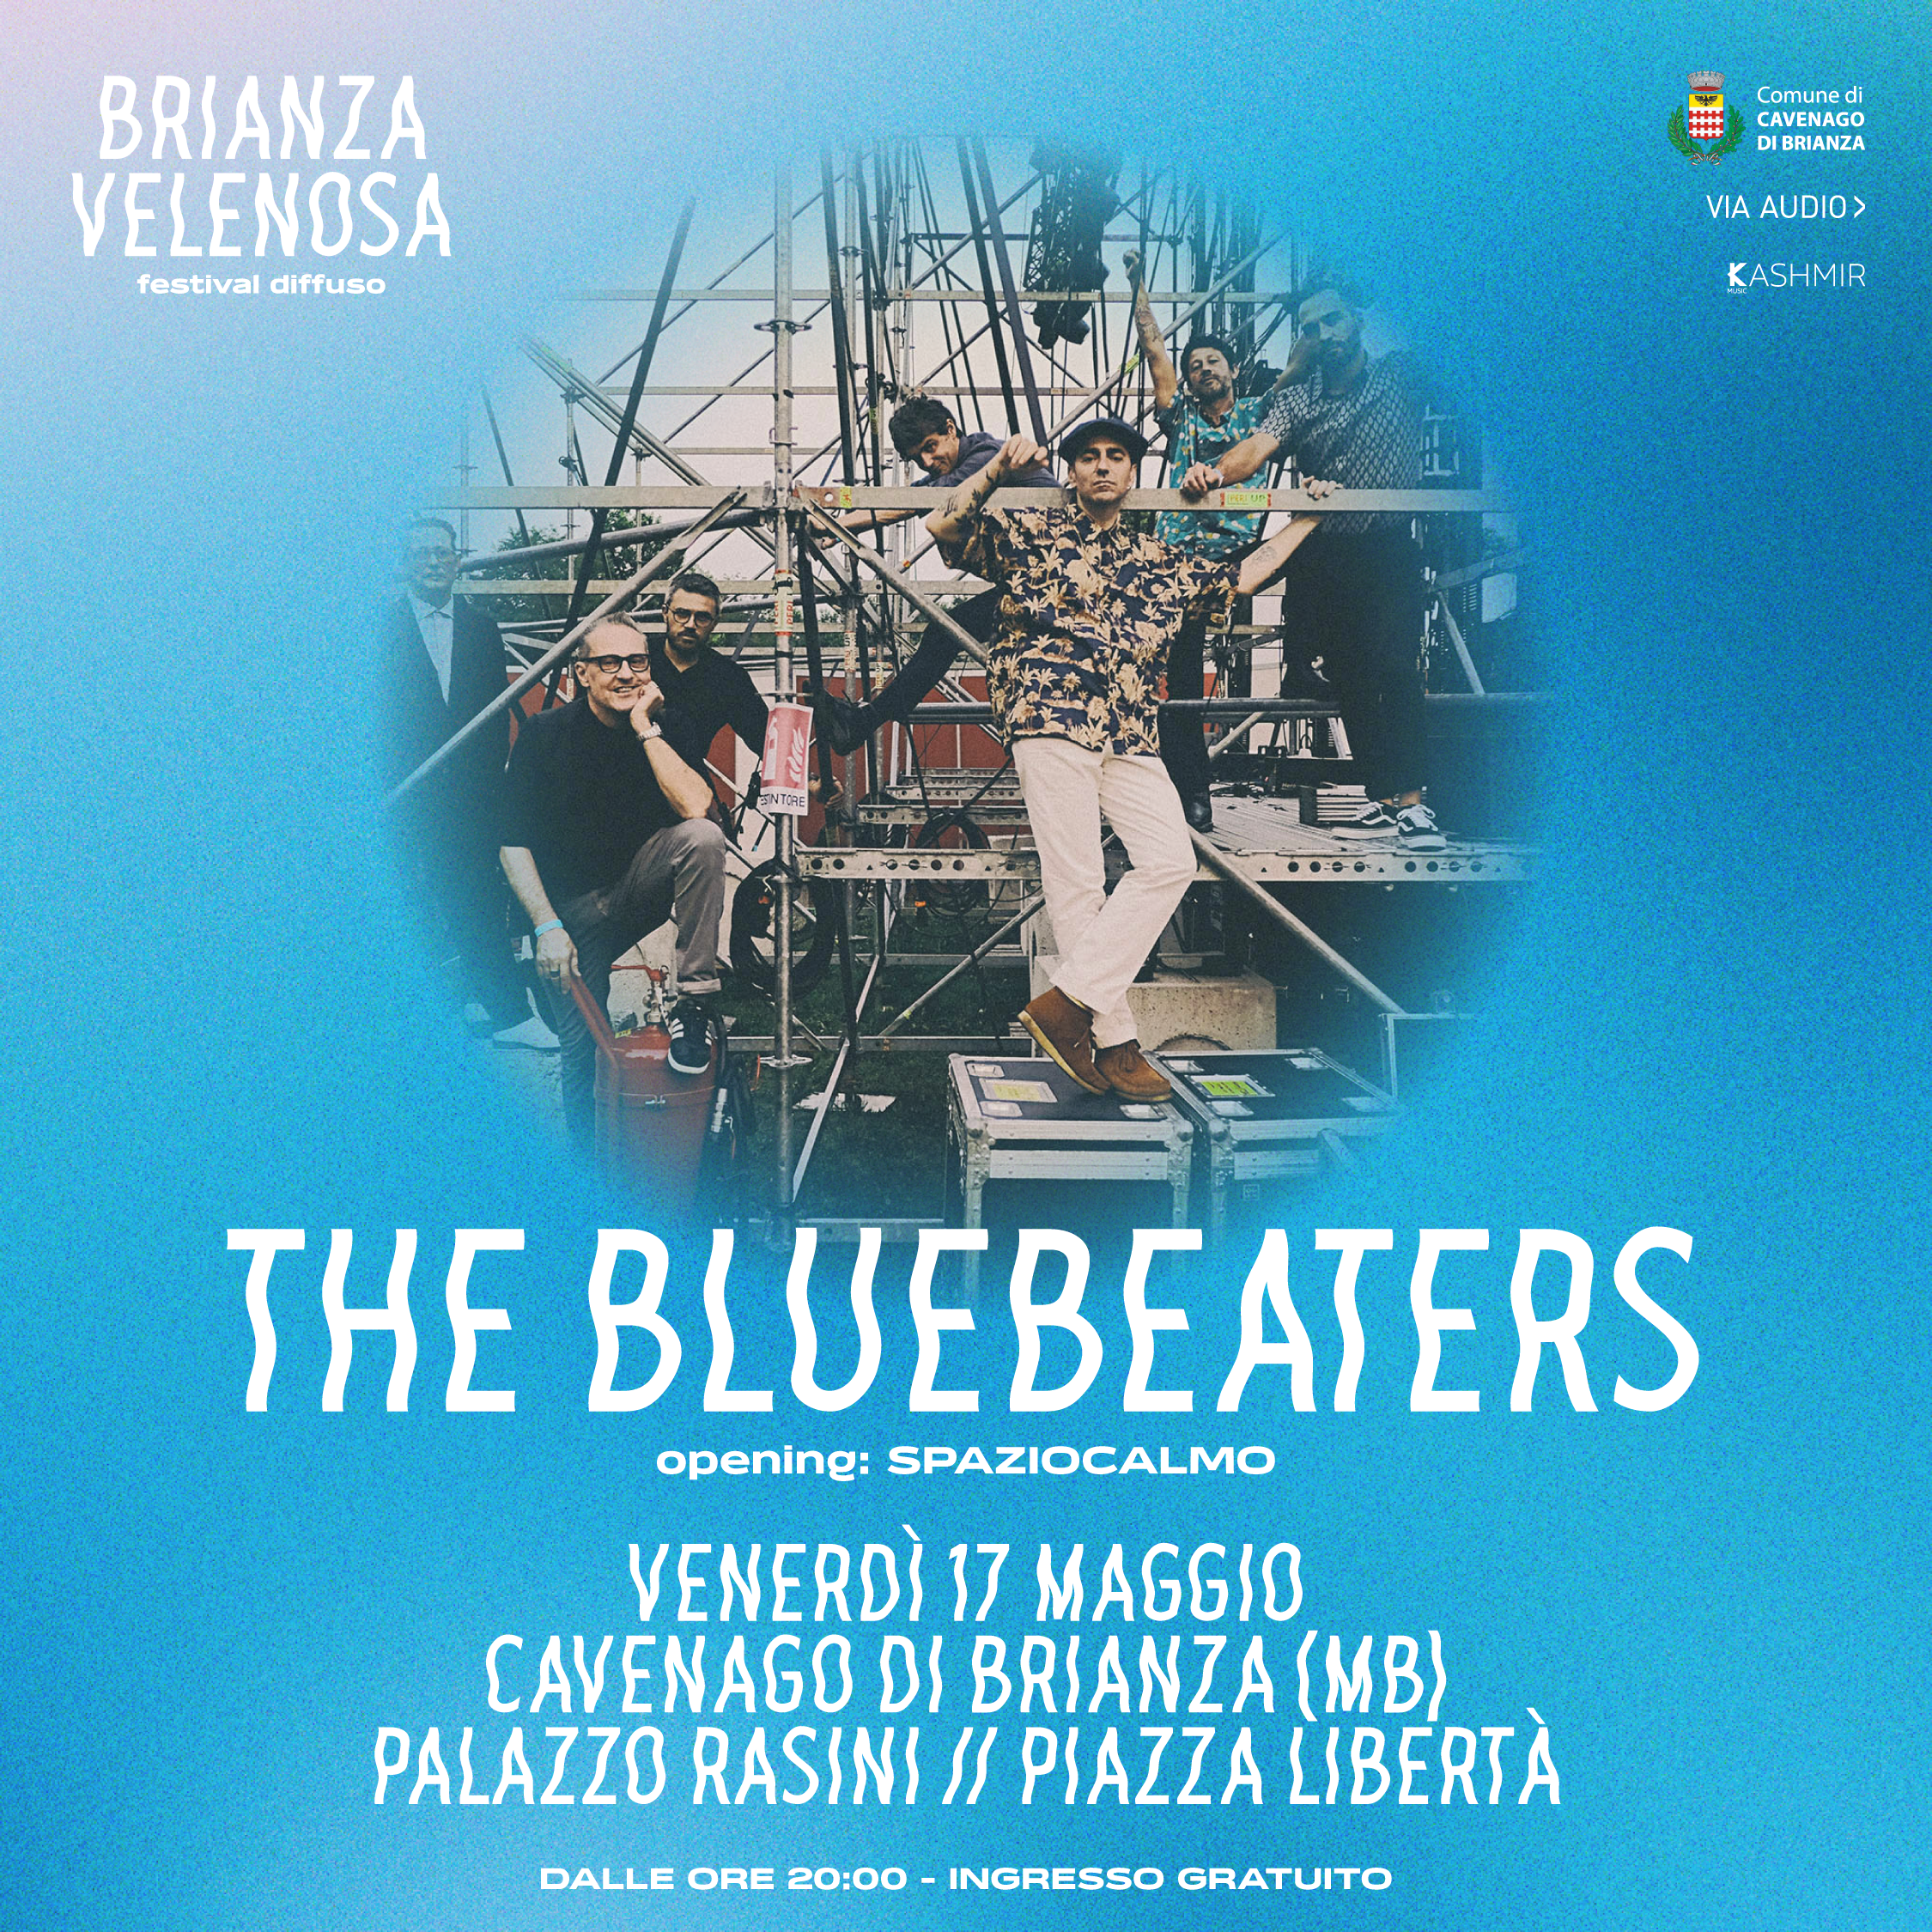 THE BLUEBEATERS • CAVENAGO DI BRIANZA